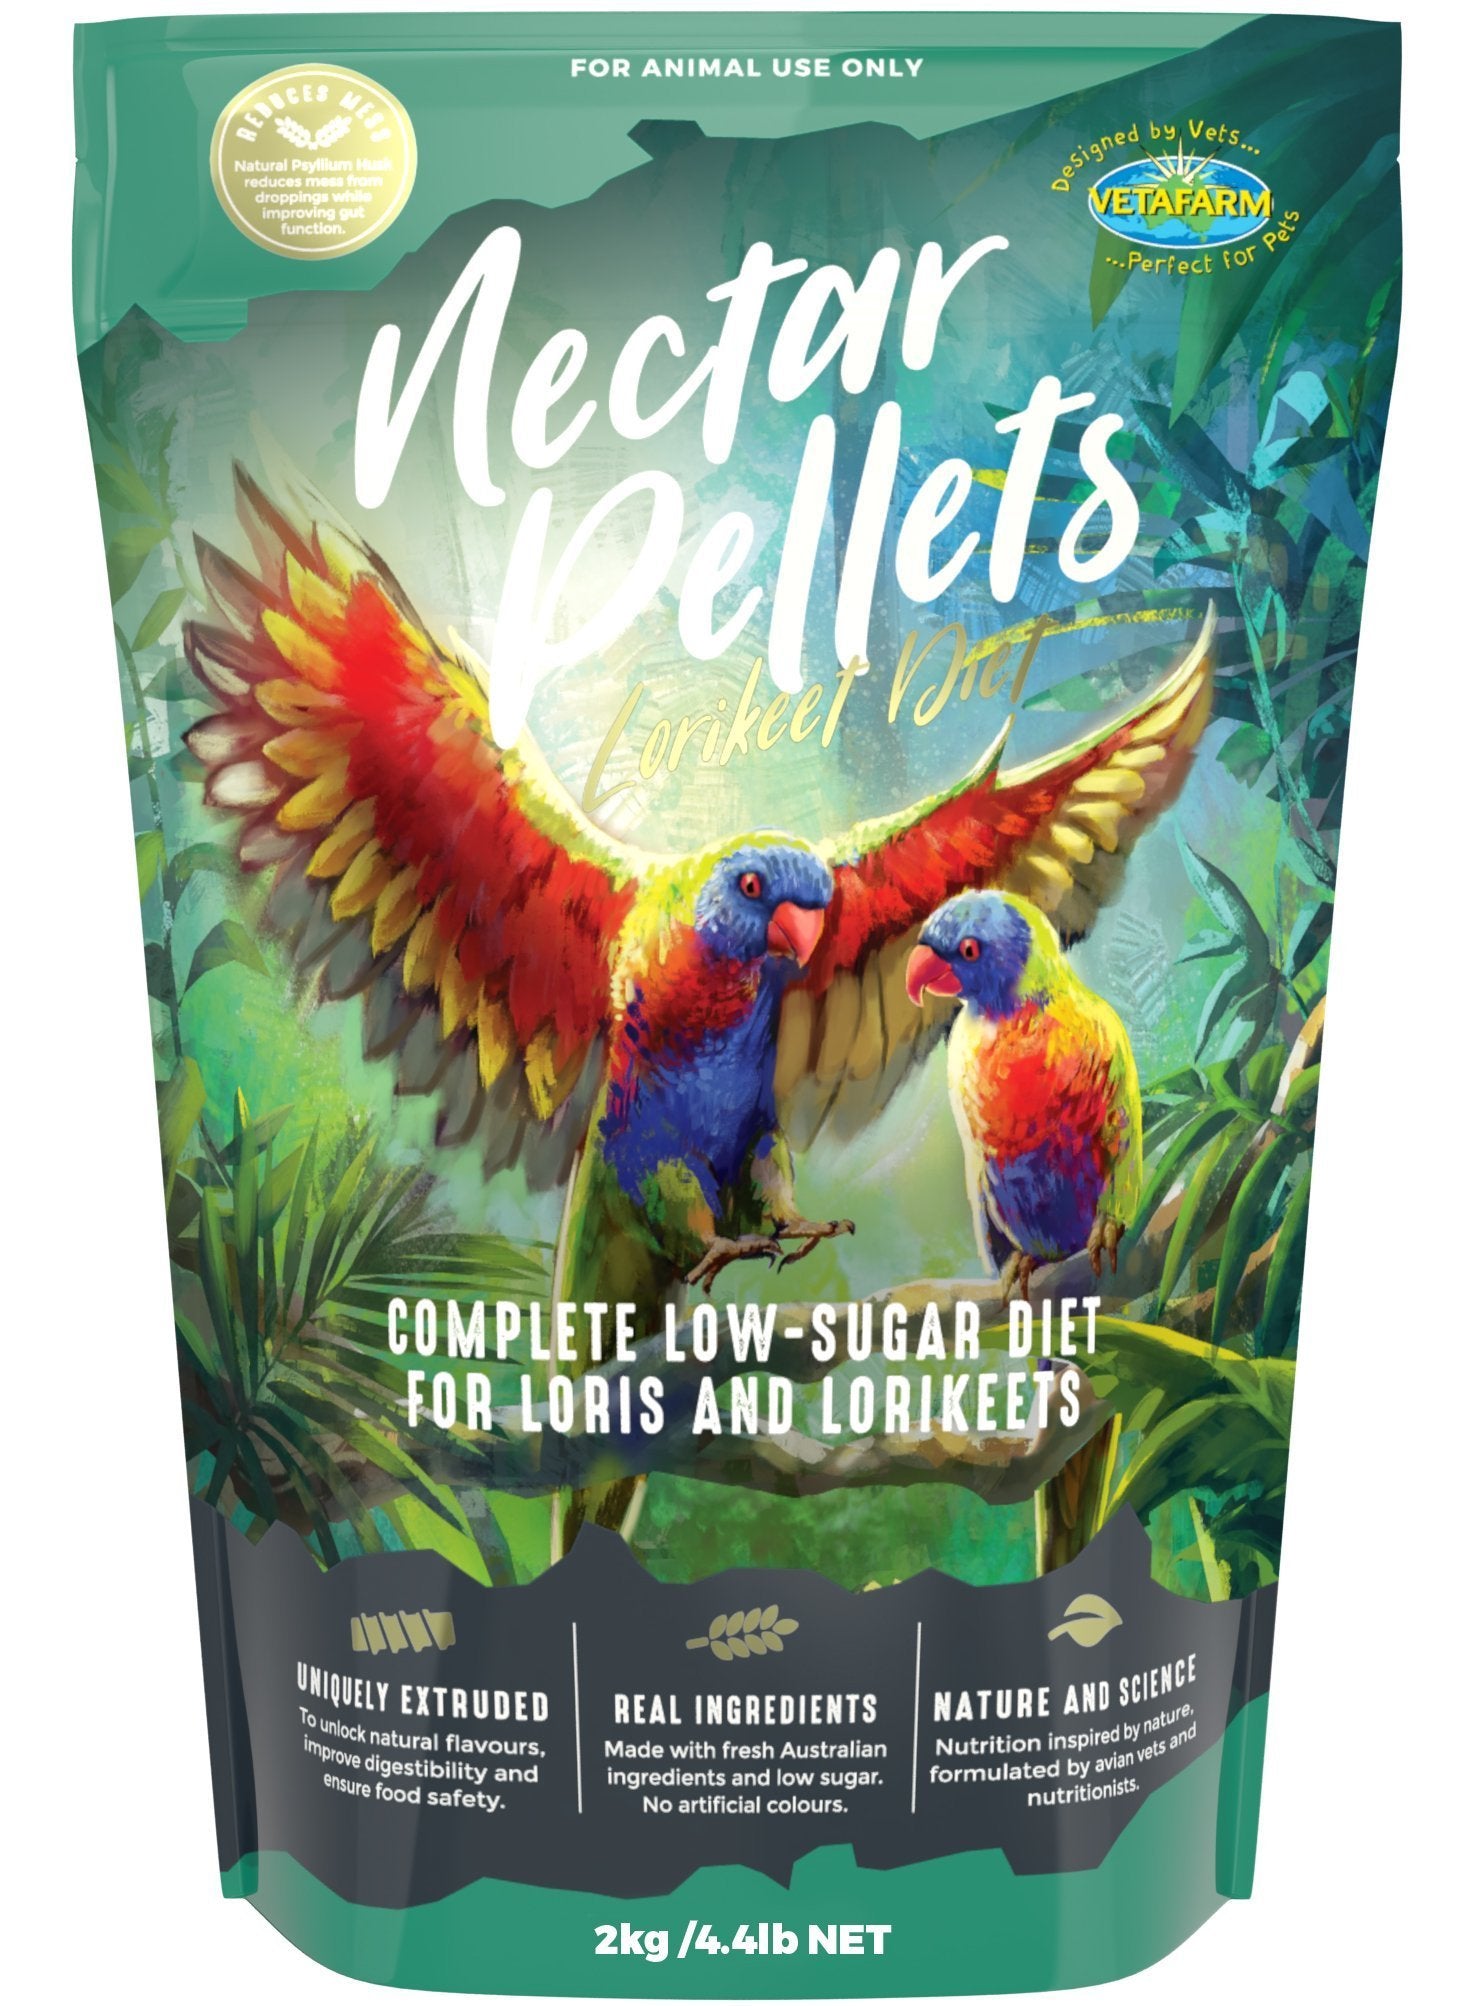 Vetafarm Nectar Pellets - Woonona Petfood & Produce